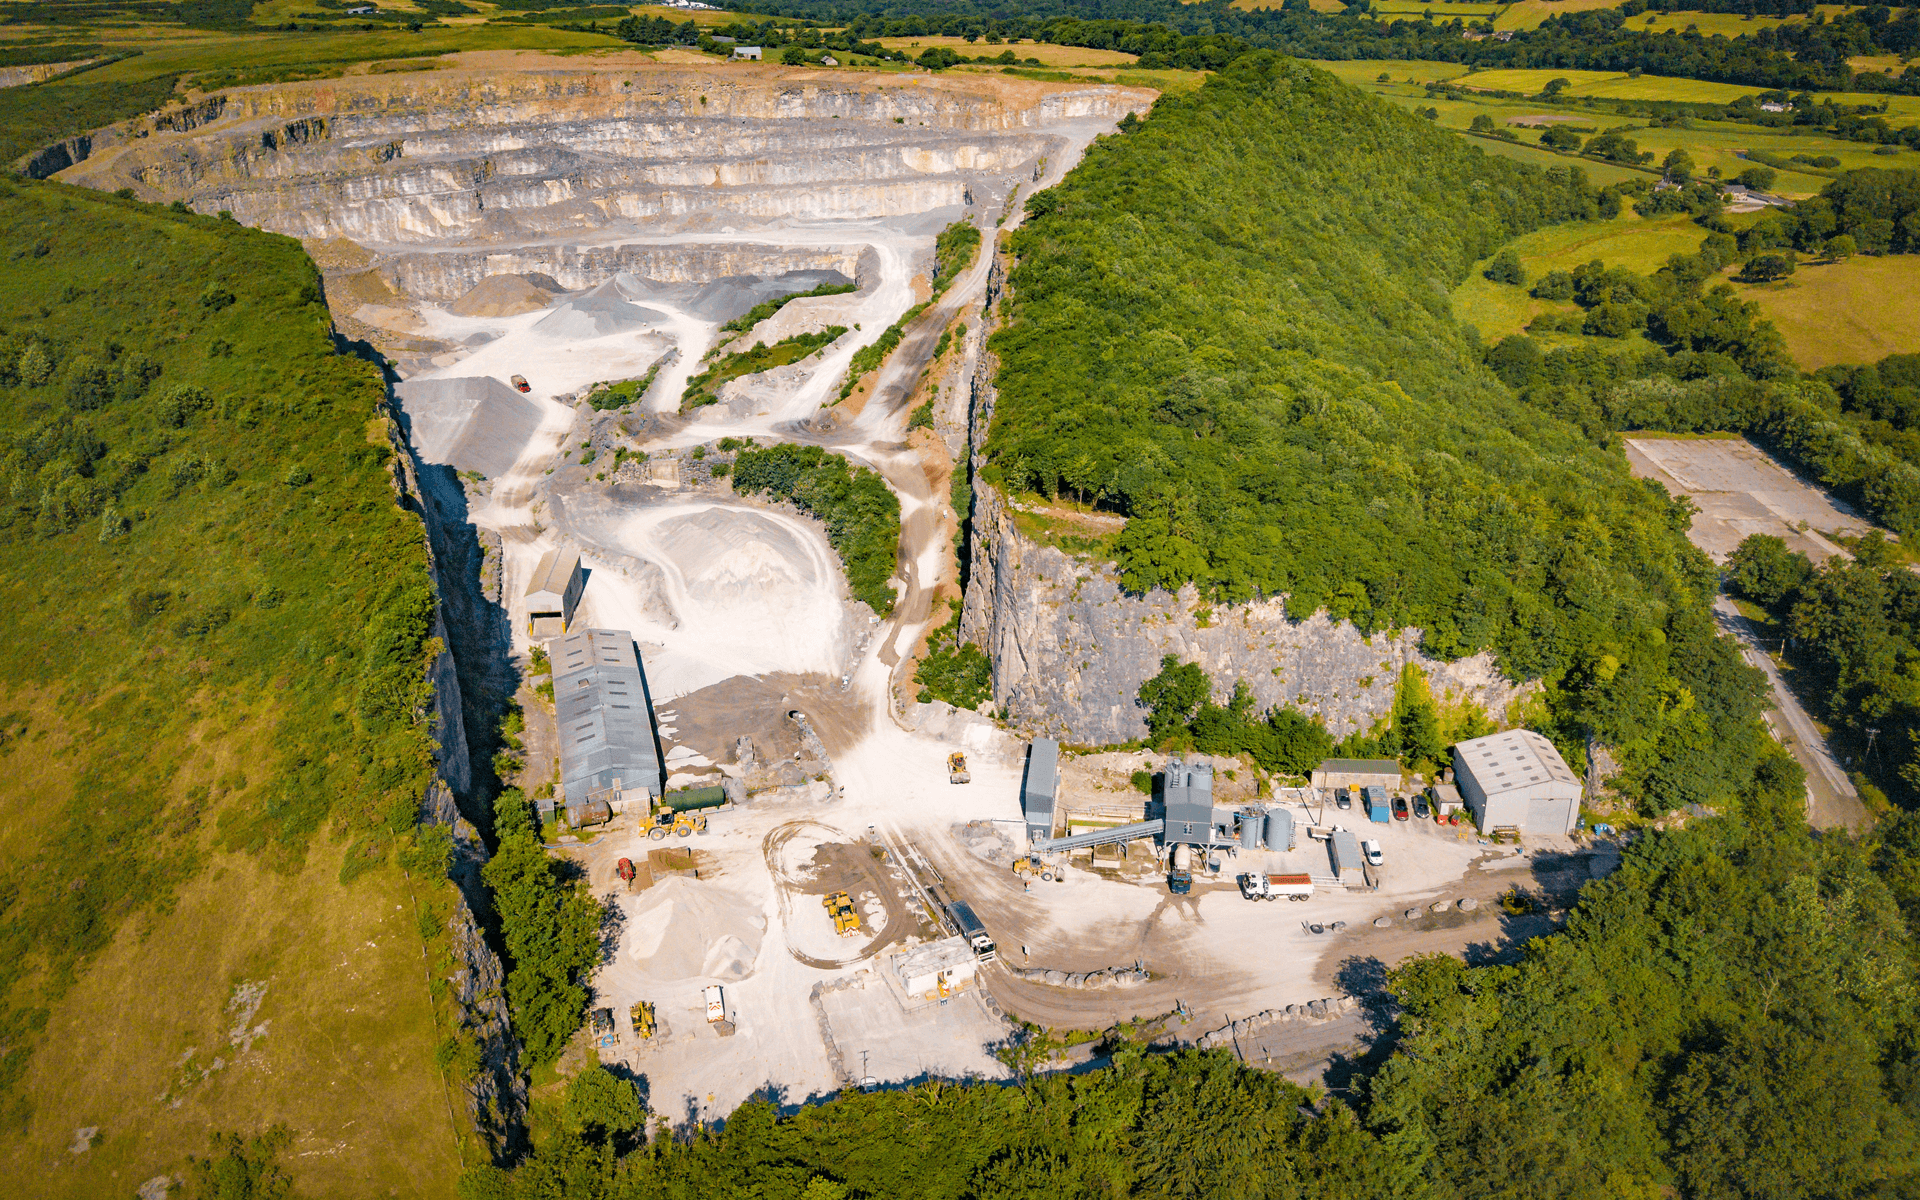 "Mavic Pro" aerial drone photo of "Hanson Aggregates" quarry in Bridgend Wales